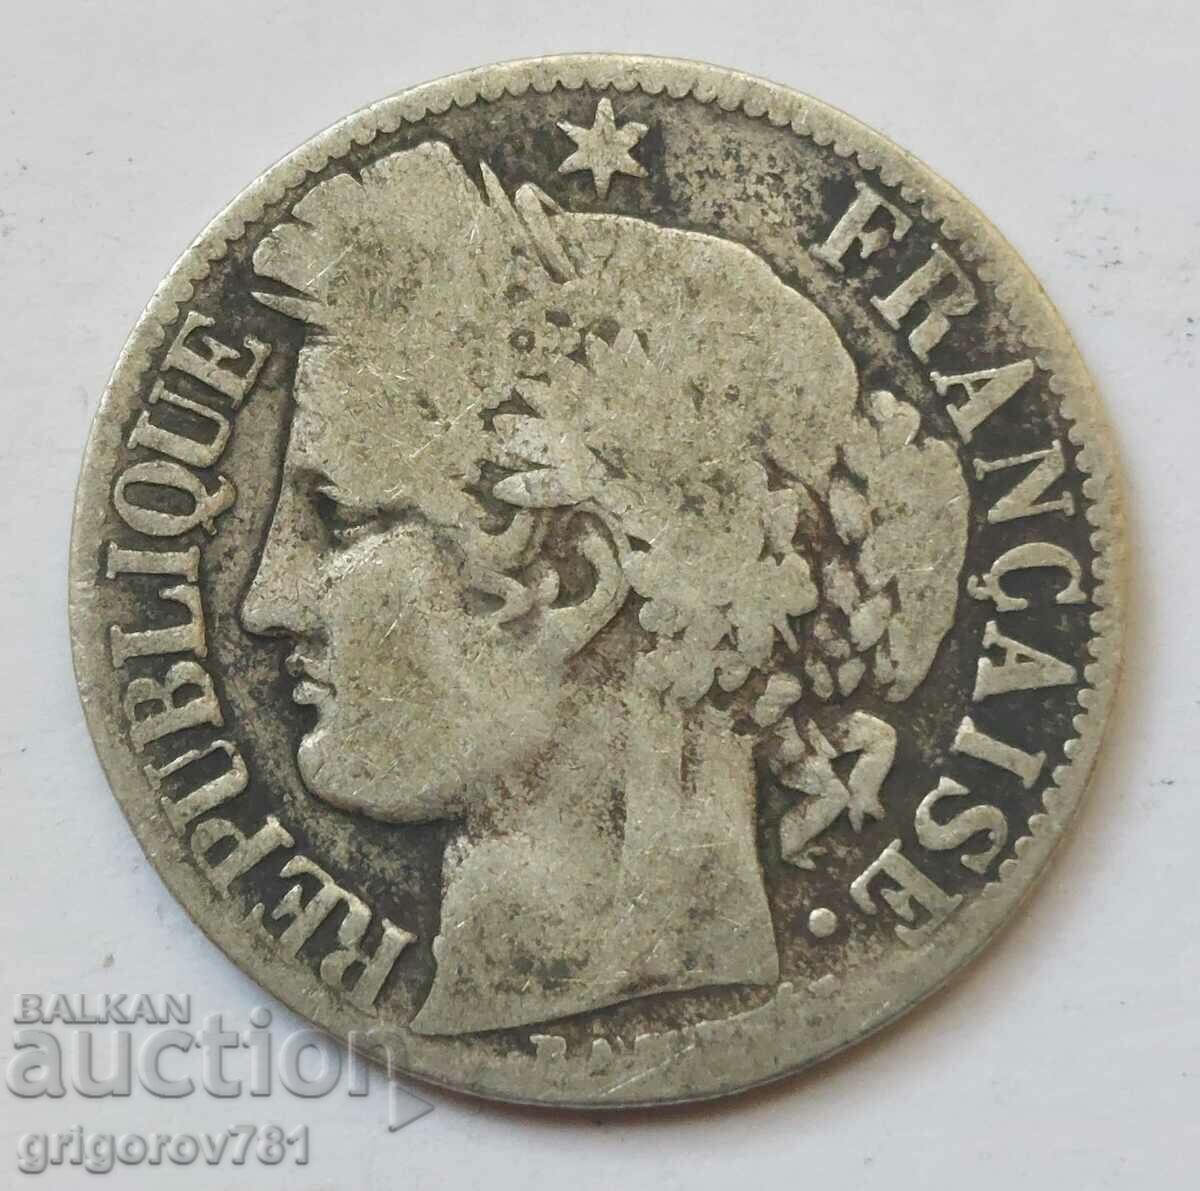 1 Franc Silver France 1872 K - Silver Coin #54